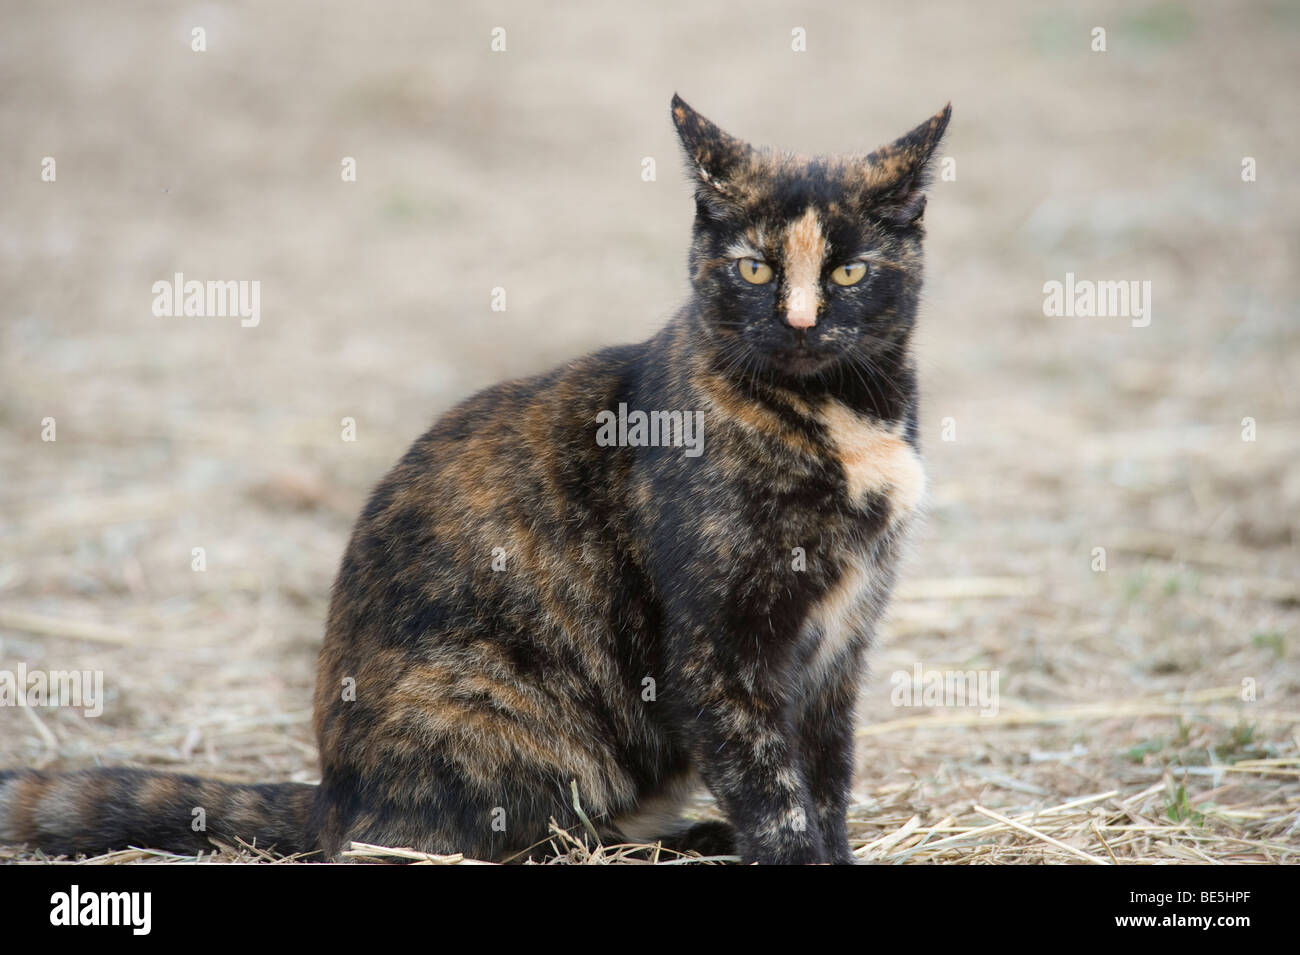 Calico barn cat sitting in straw Stock Photo